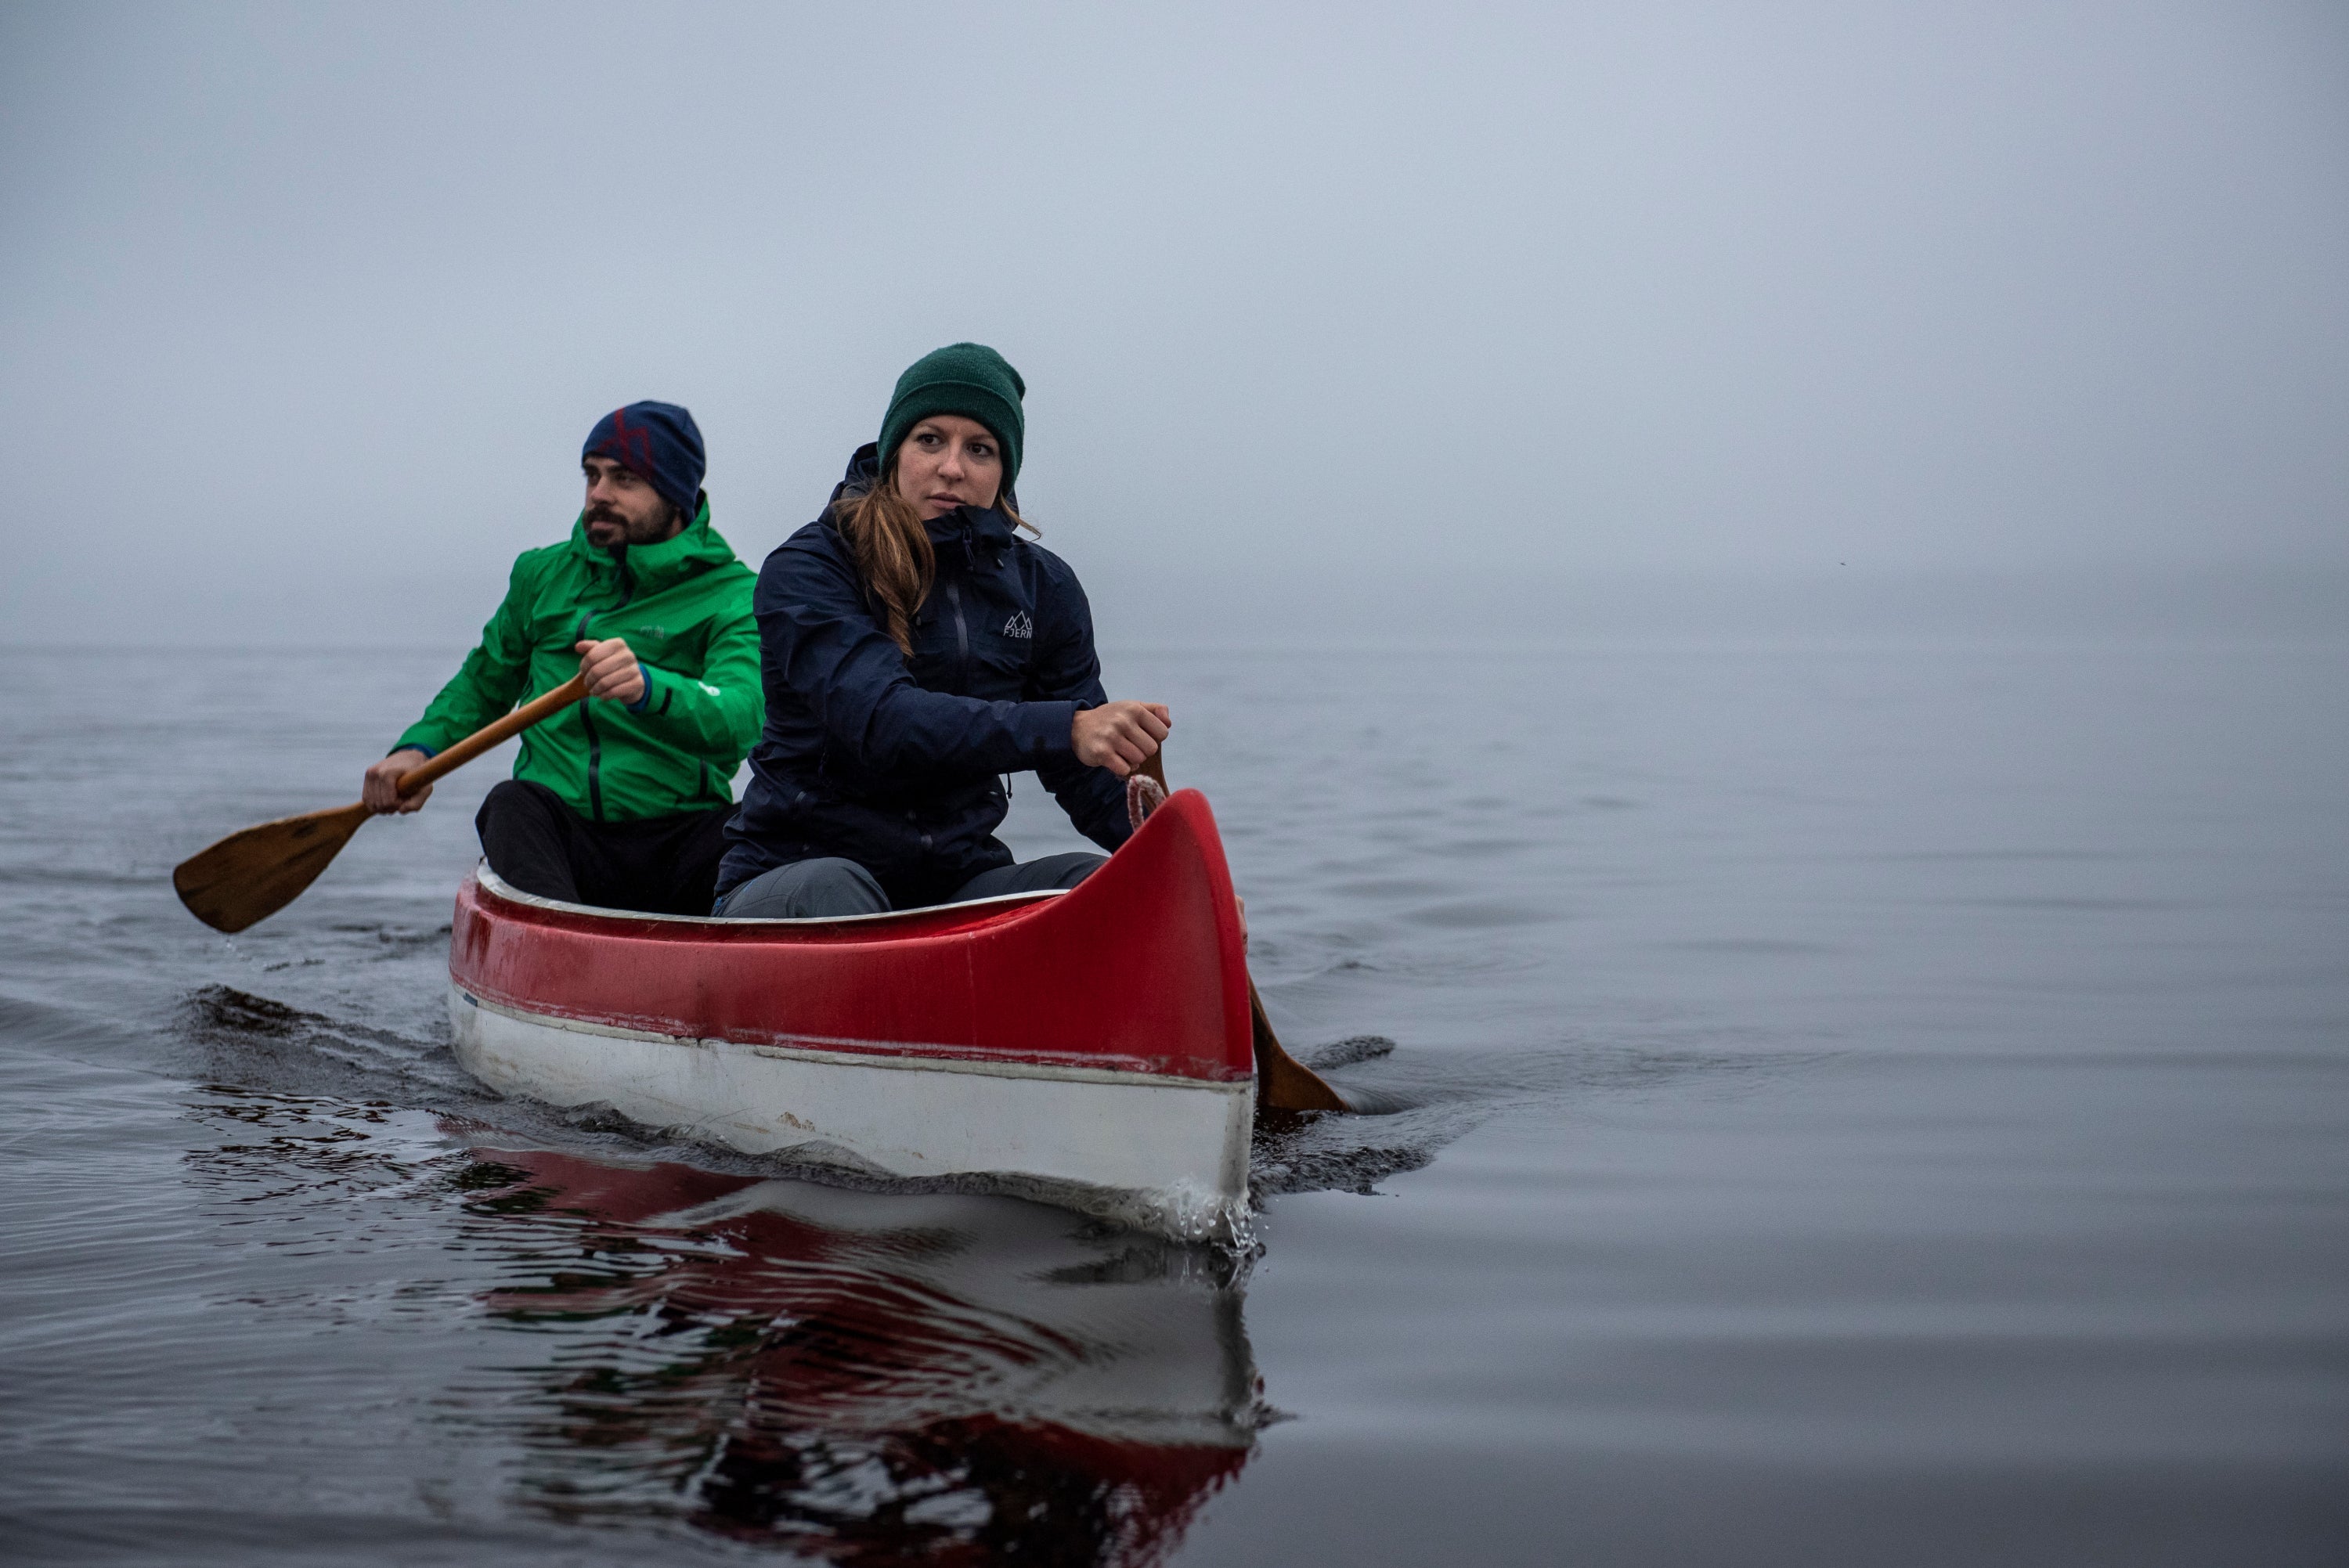 Fjern Skjold Packable Jacket on a canoe paddling across a foggy lake